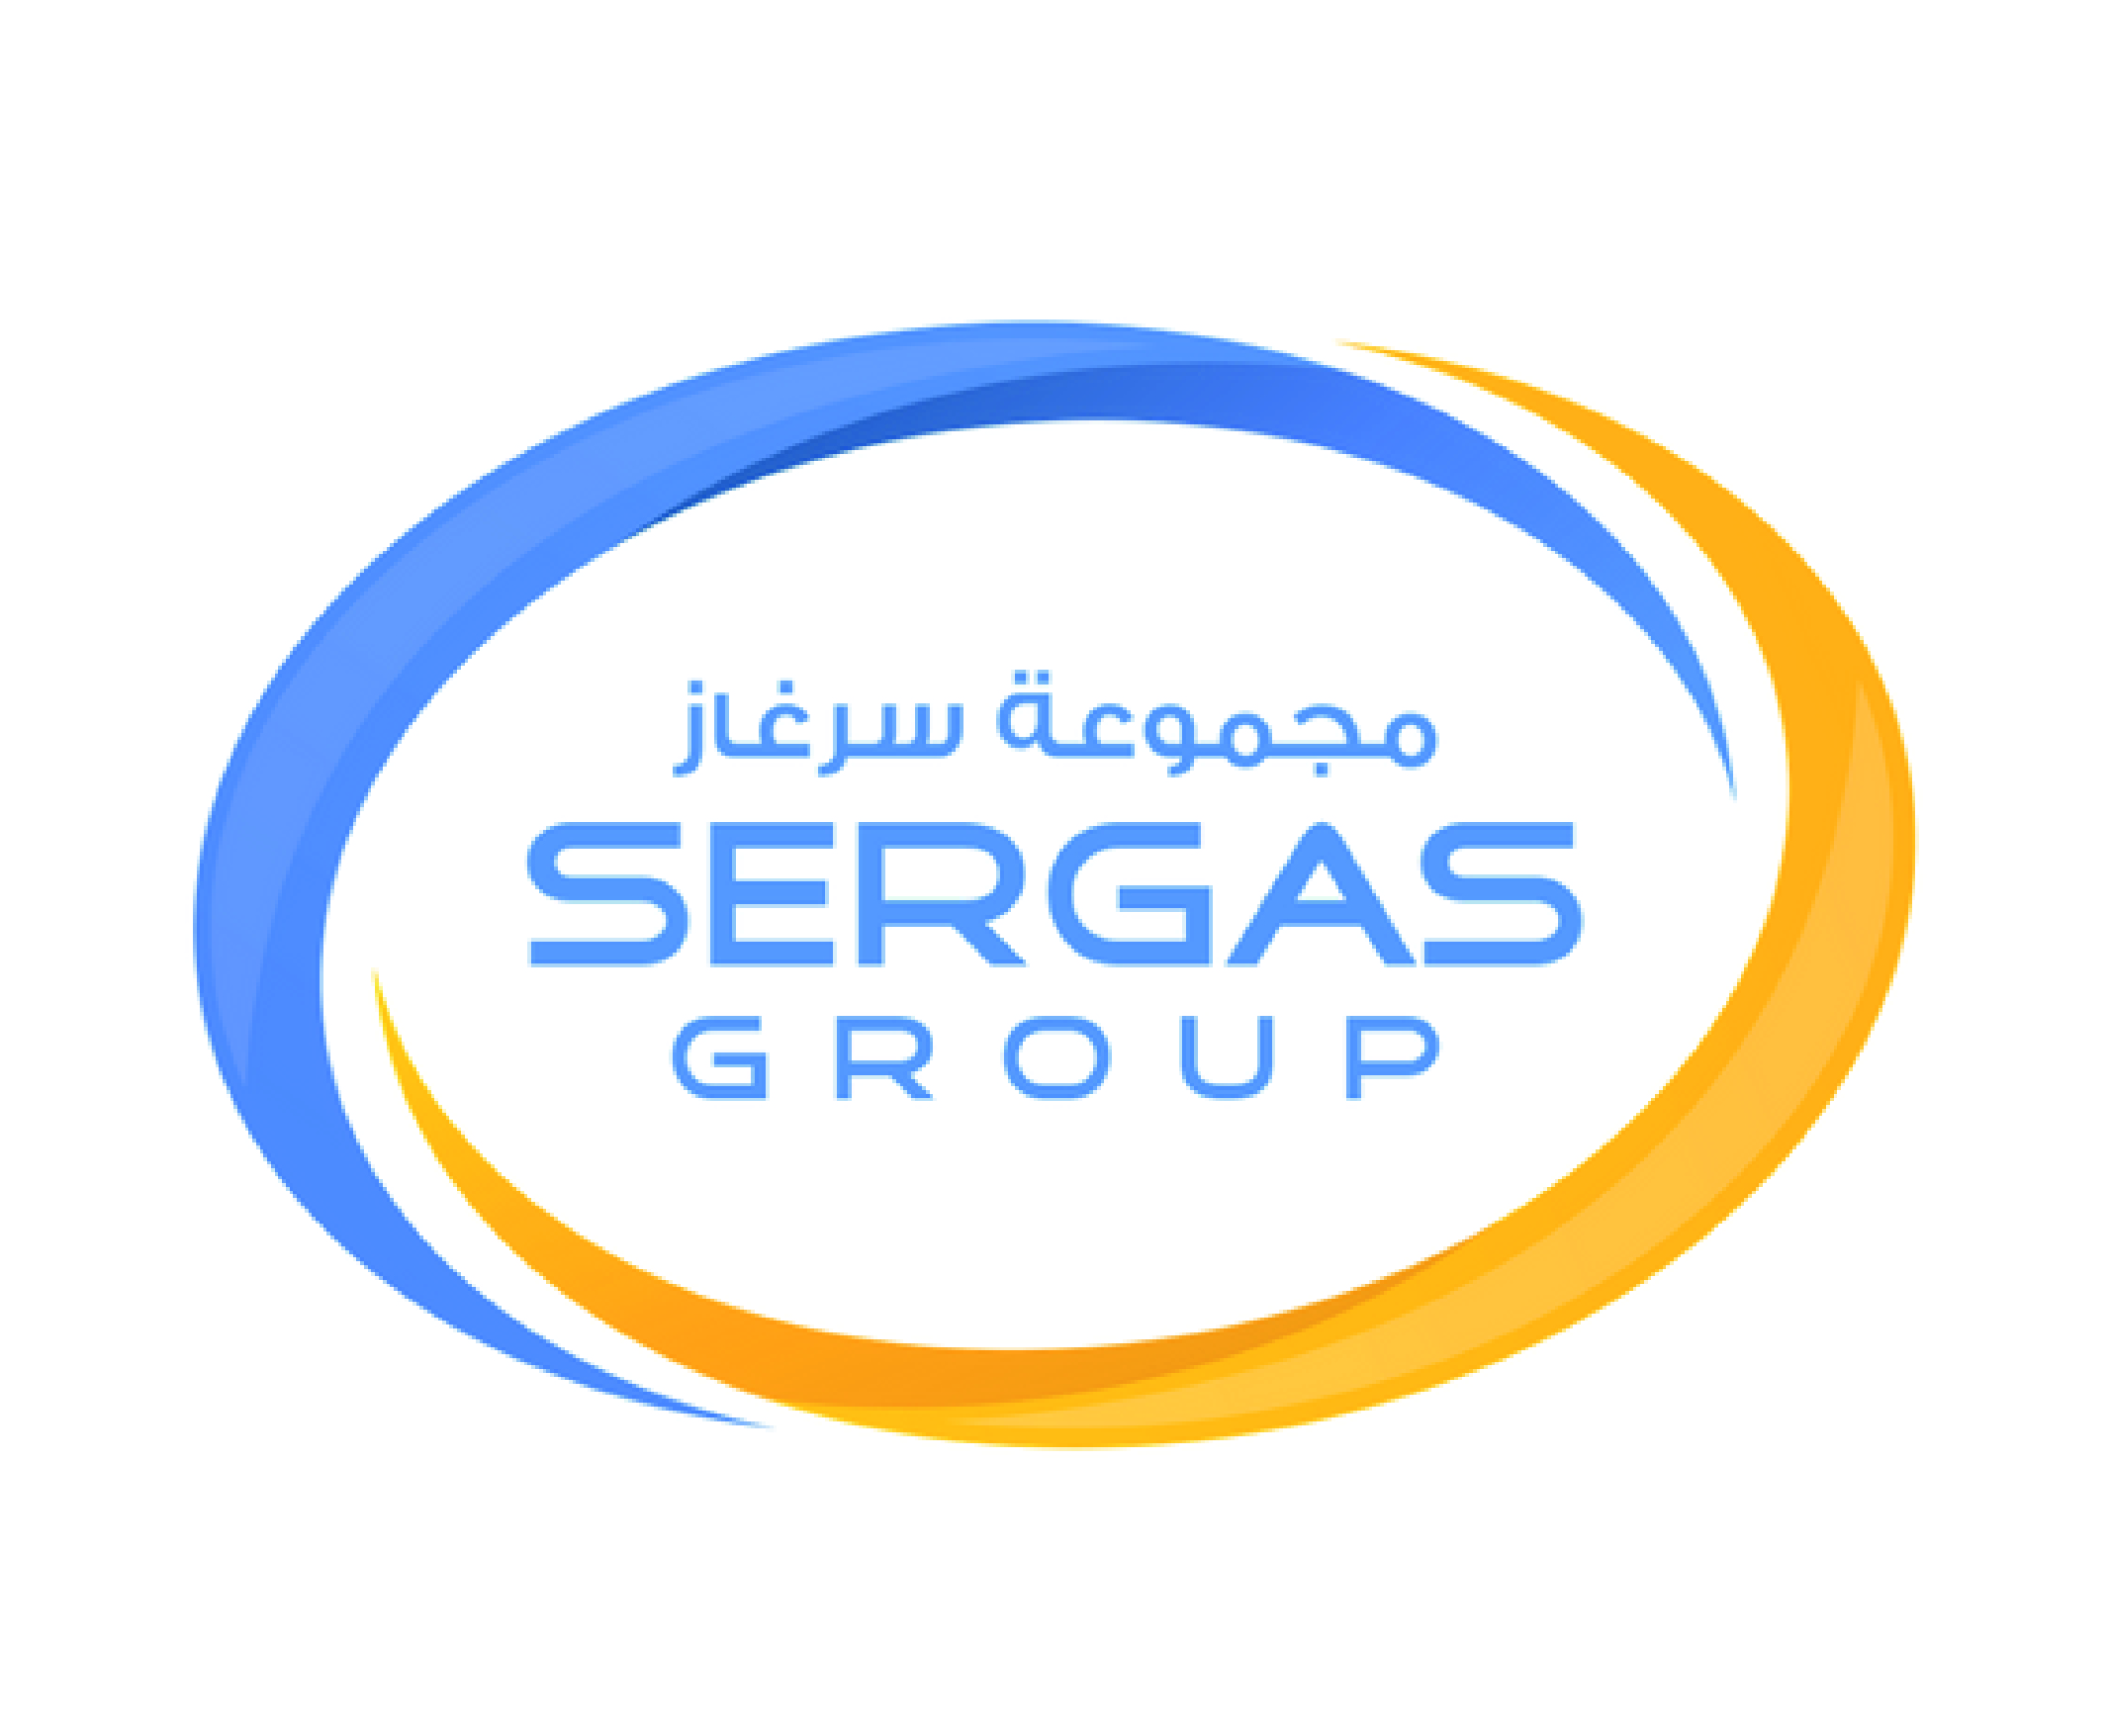 Sergas group